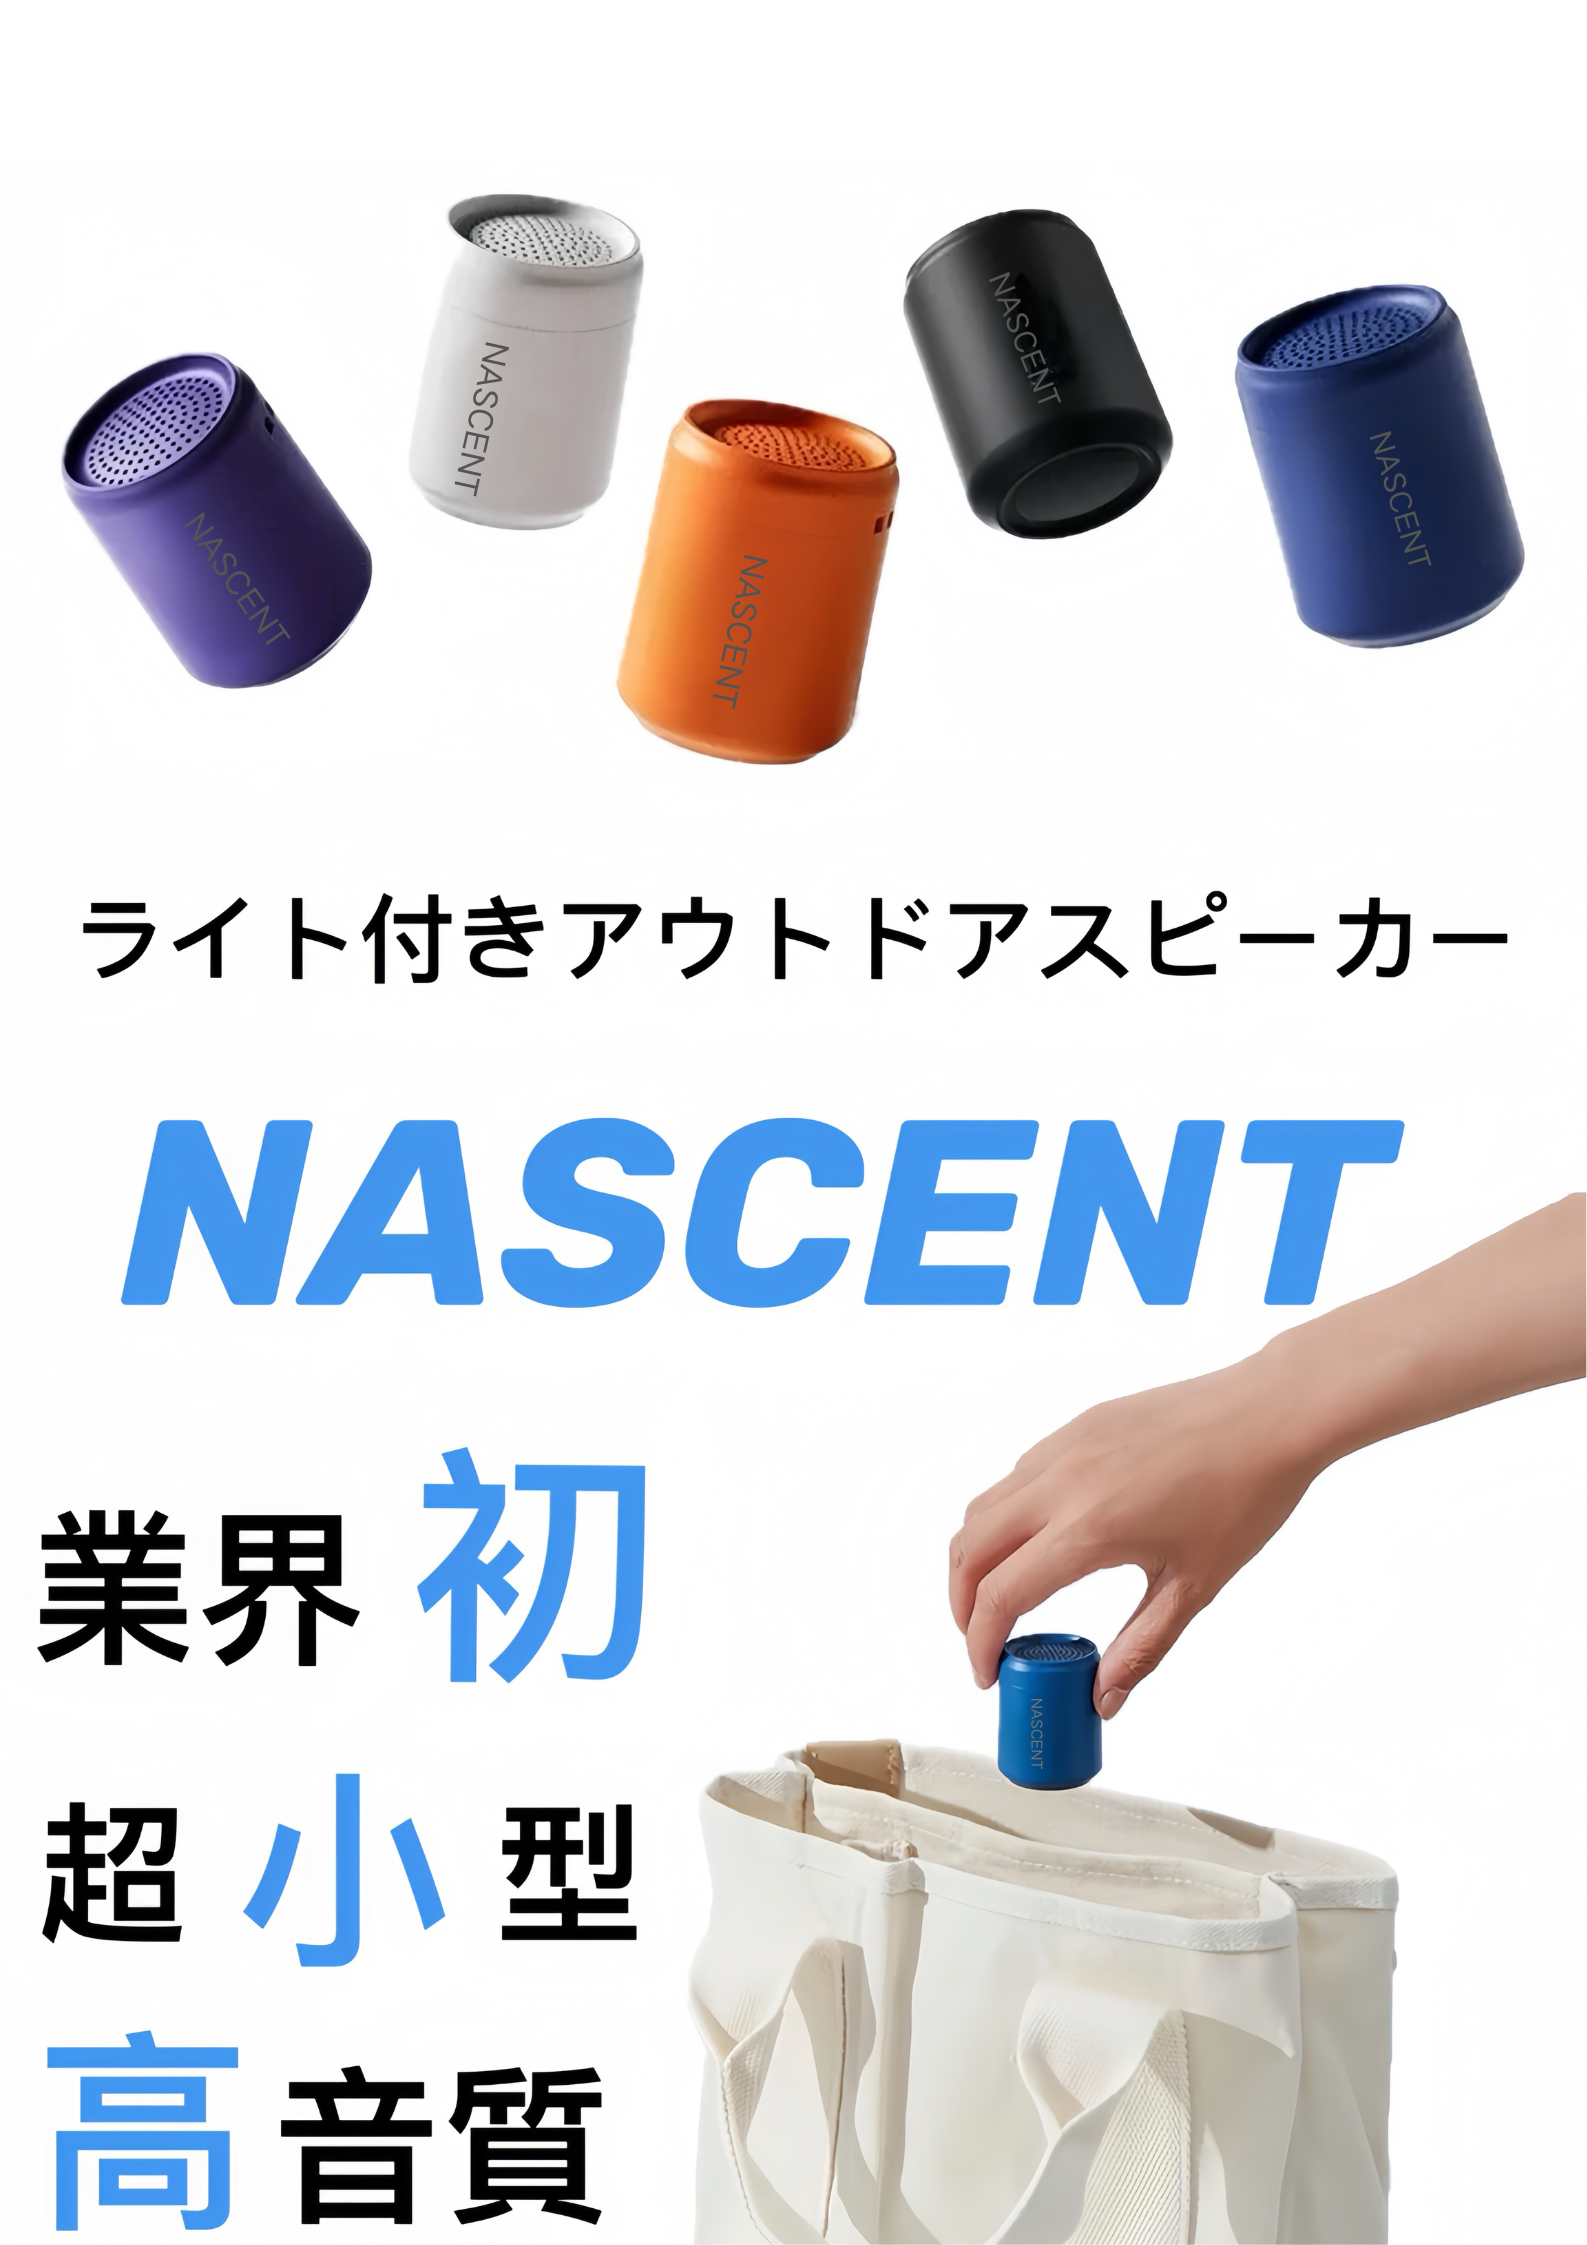 Nascent株式会社がアウトドア向けの新製品発表　#第15回 DESIGN TOKYO 国際デザイン製品展に合わせてオフライ...